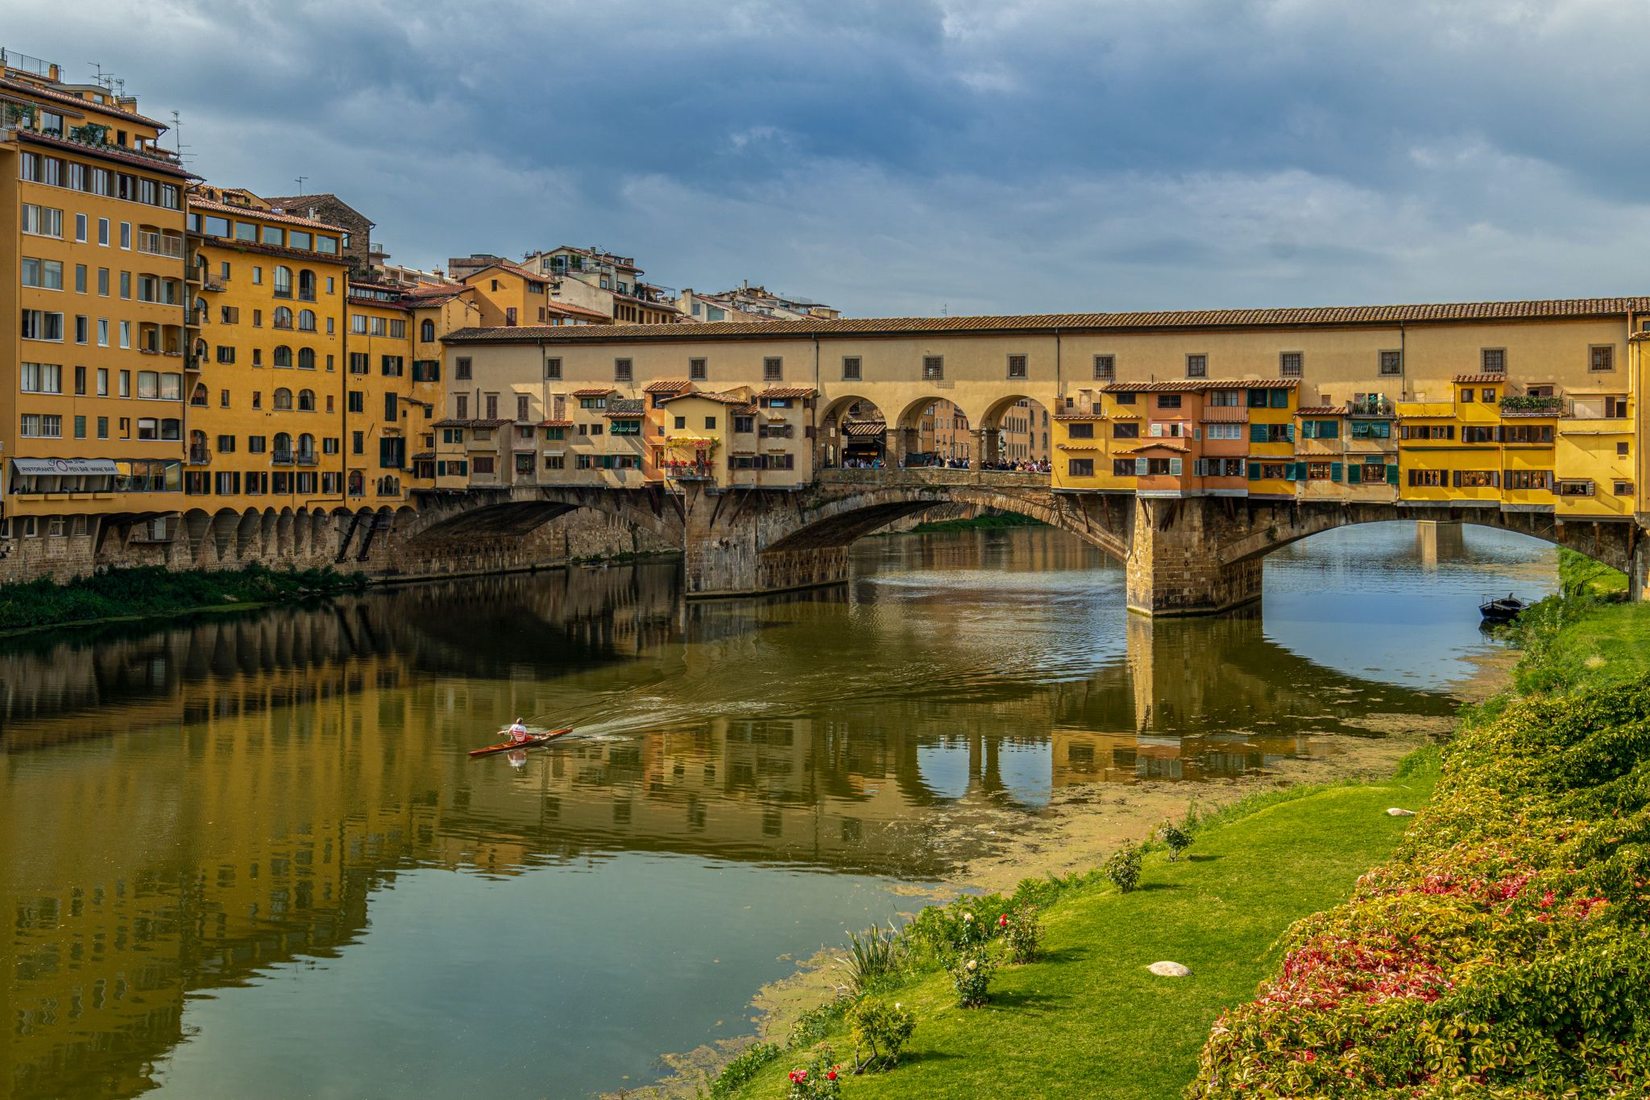 Ponte Vecchio Bridge in Florence